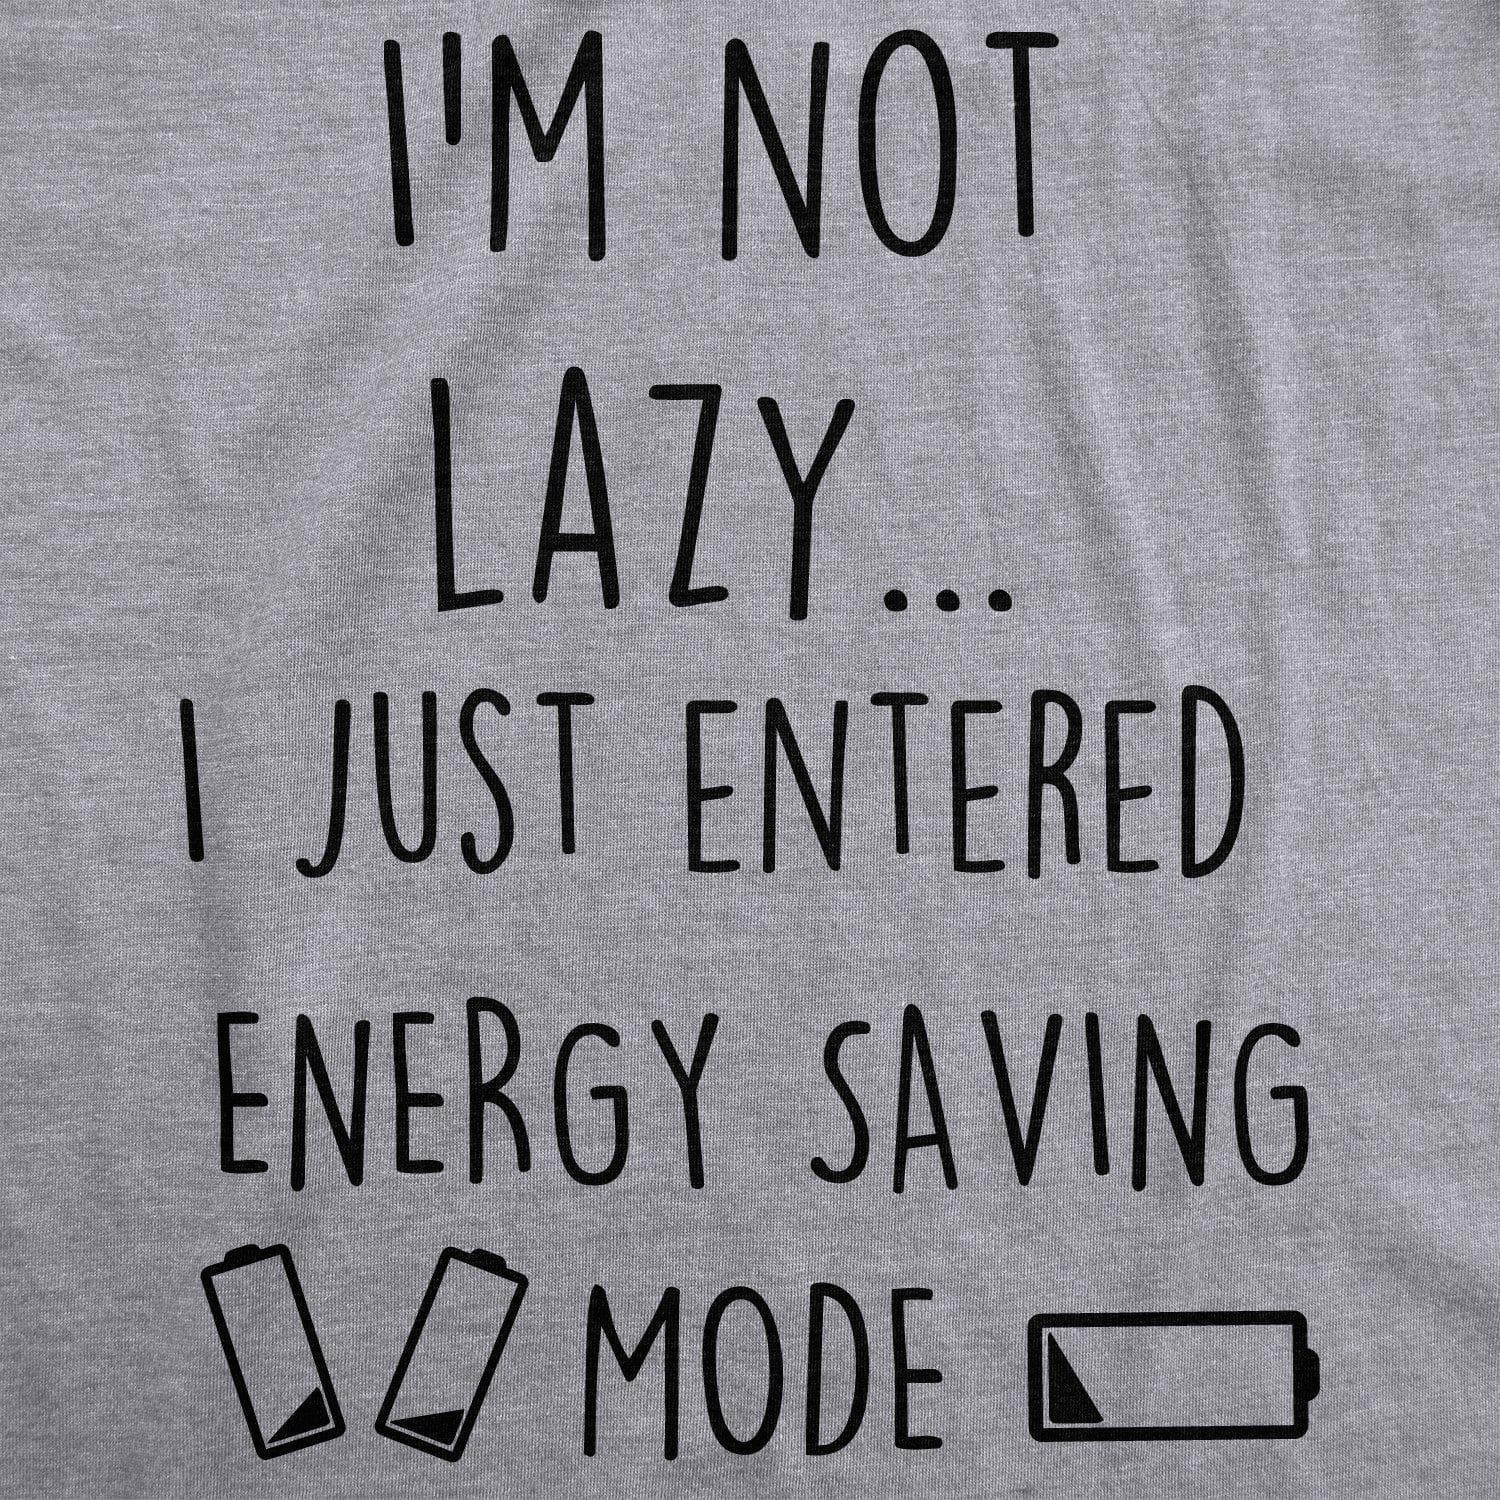 Not Lazy Entered Energy Saving Mode Men's Tshirt - Crazy Dog T-Shirts